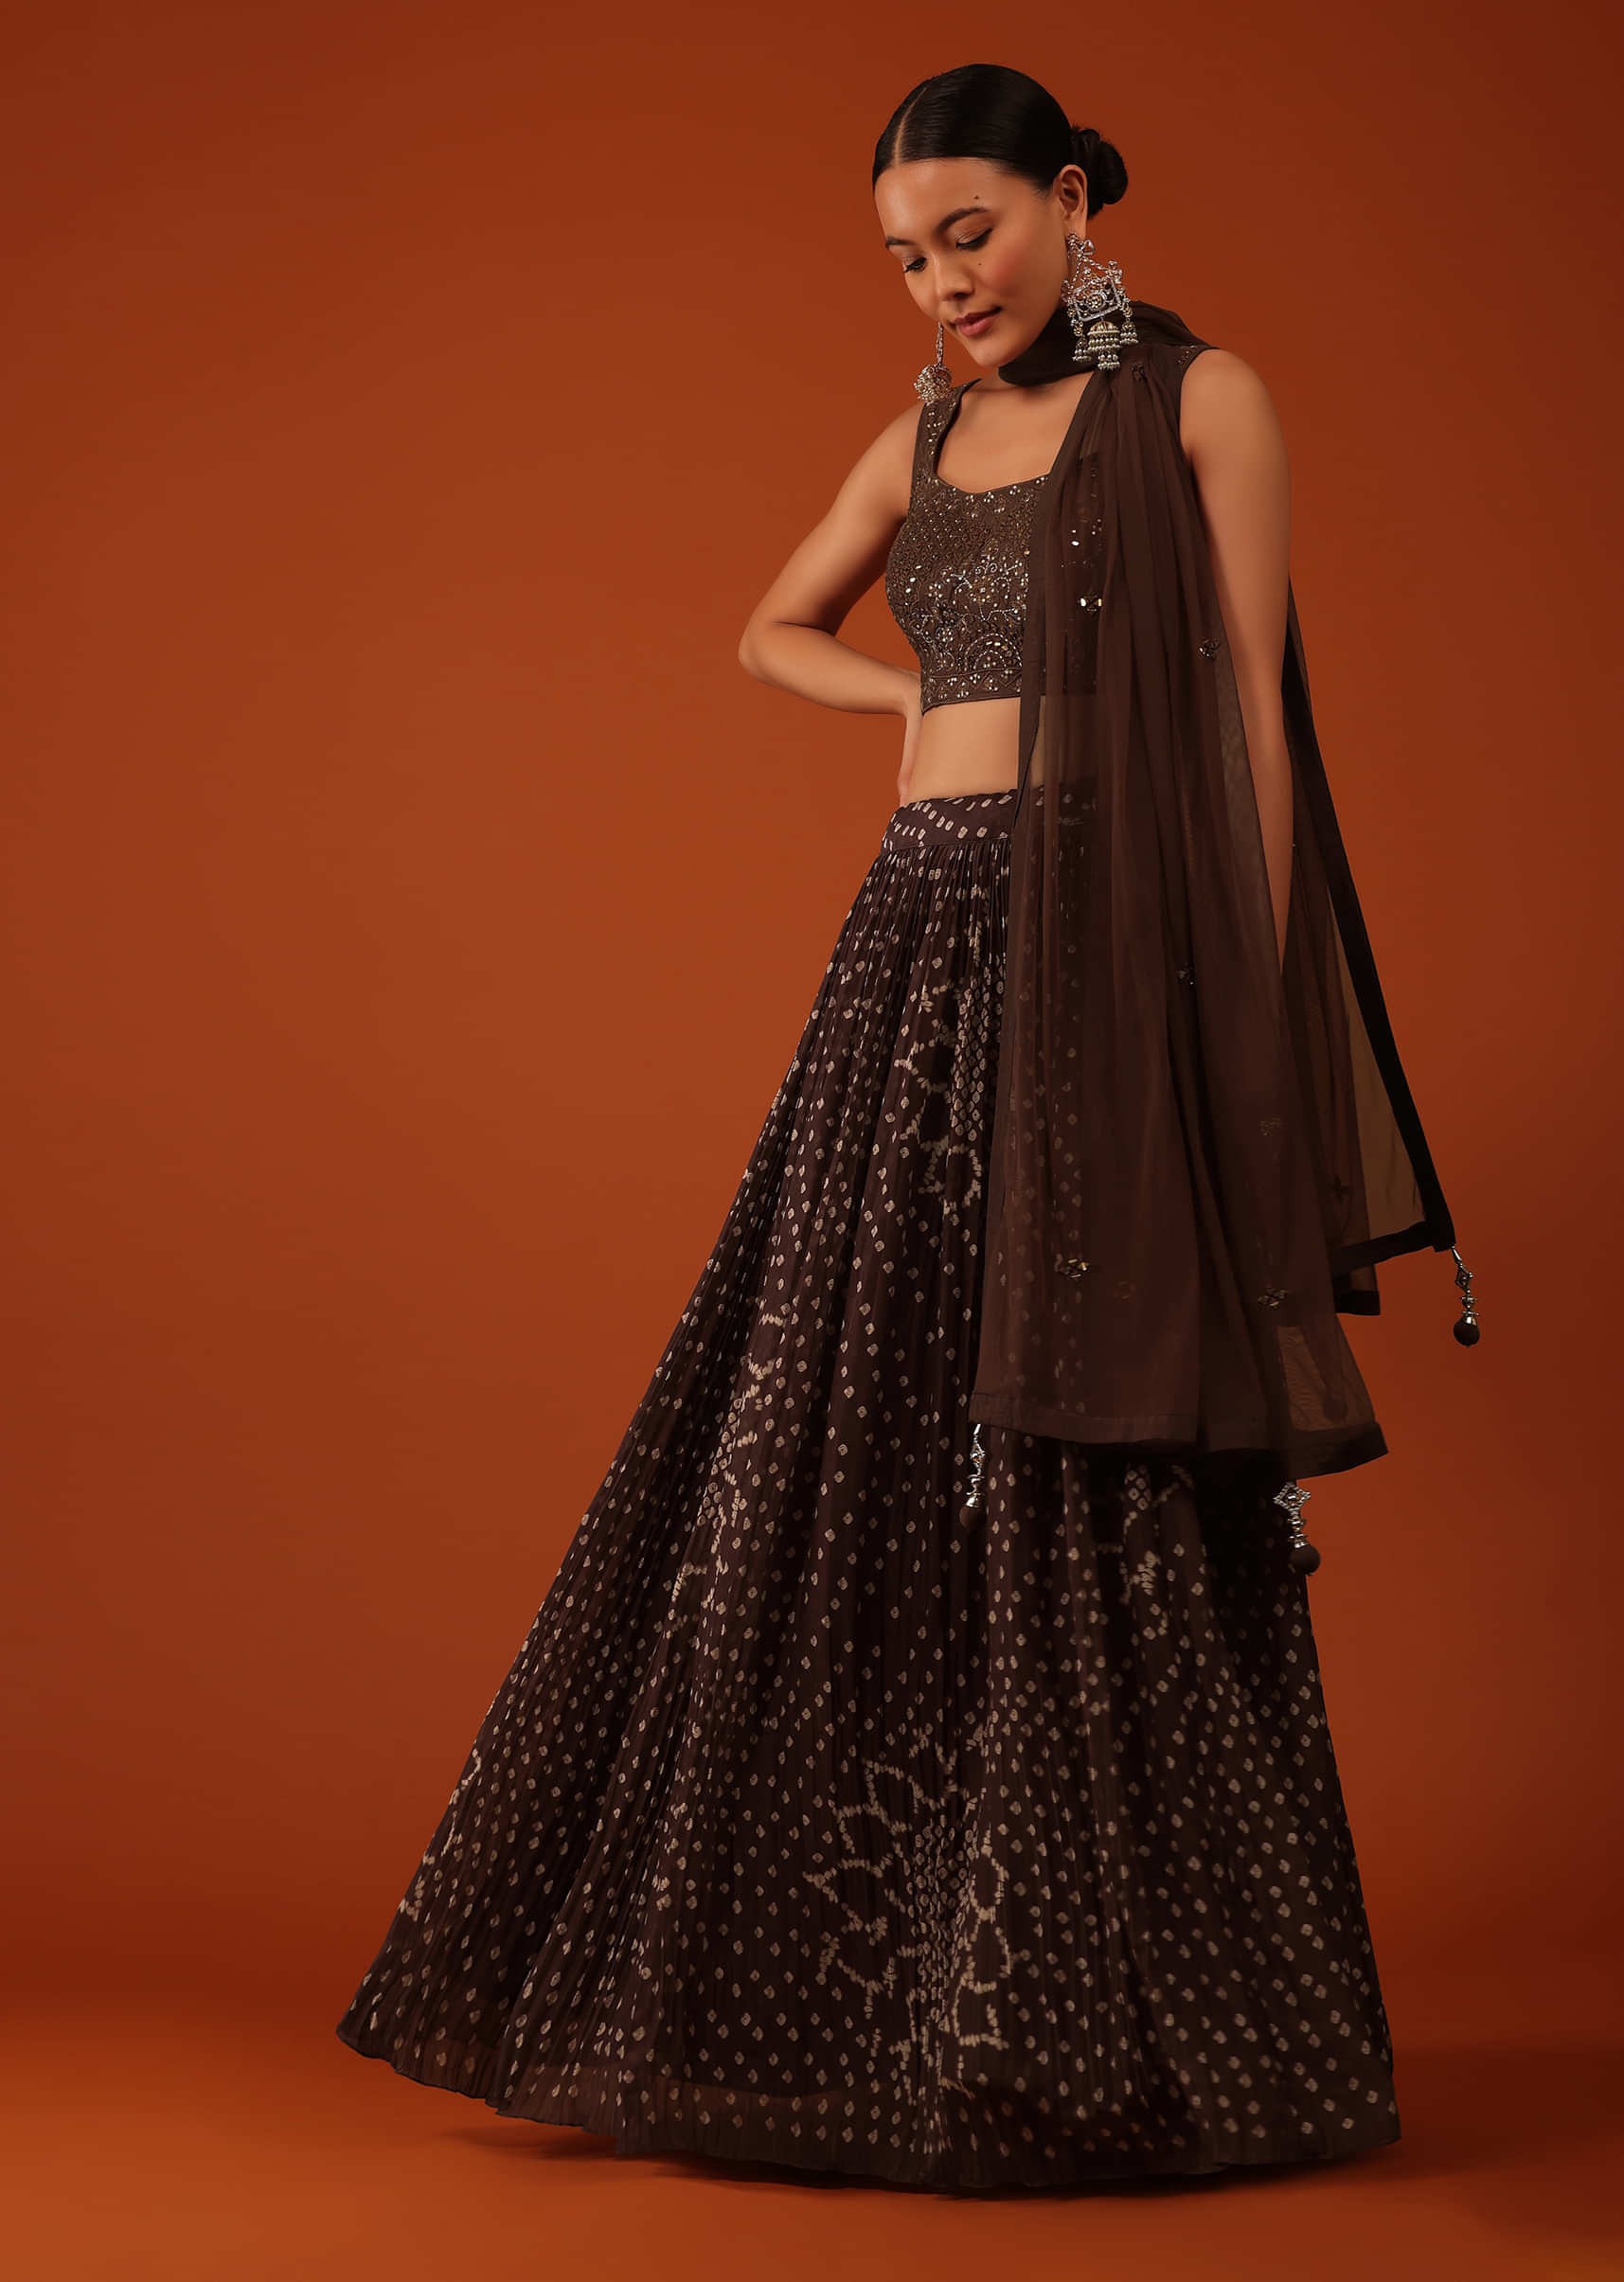 Bridal Story Lehenga Choli - Black In Vogue